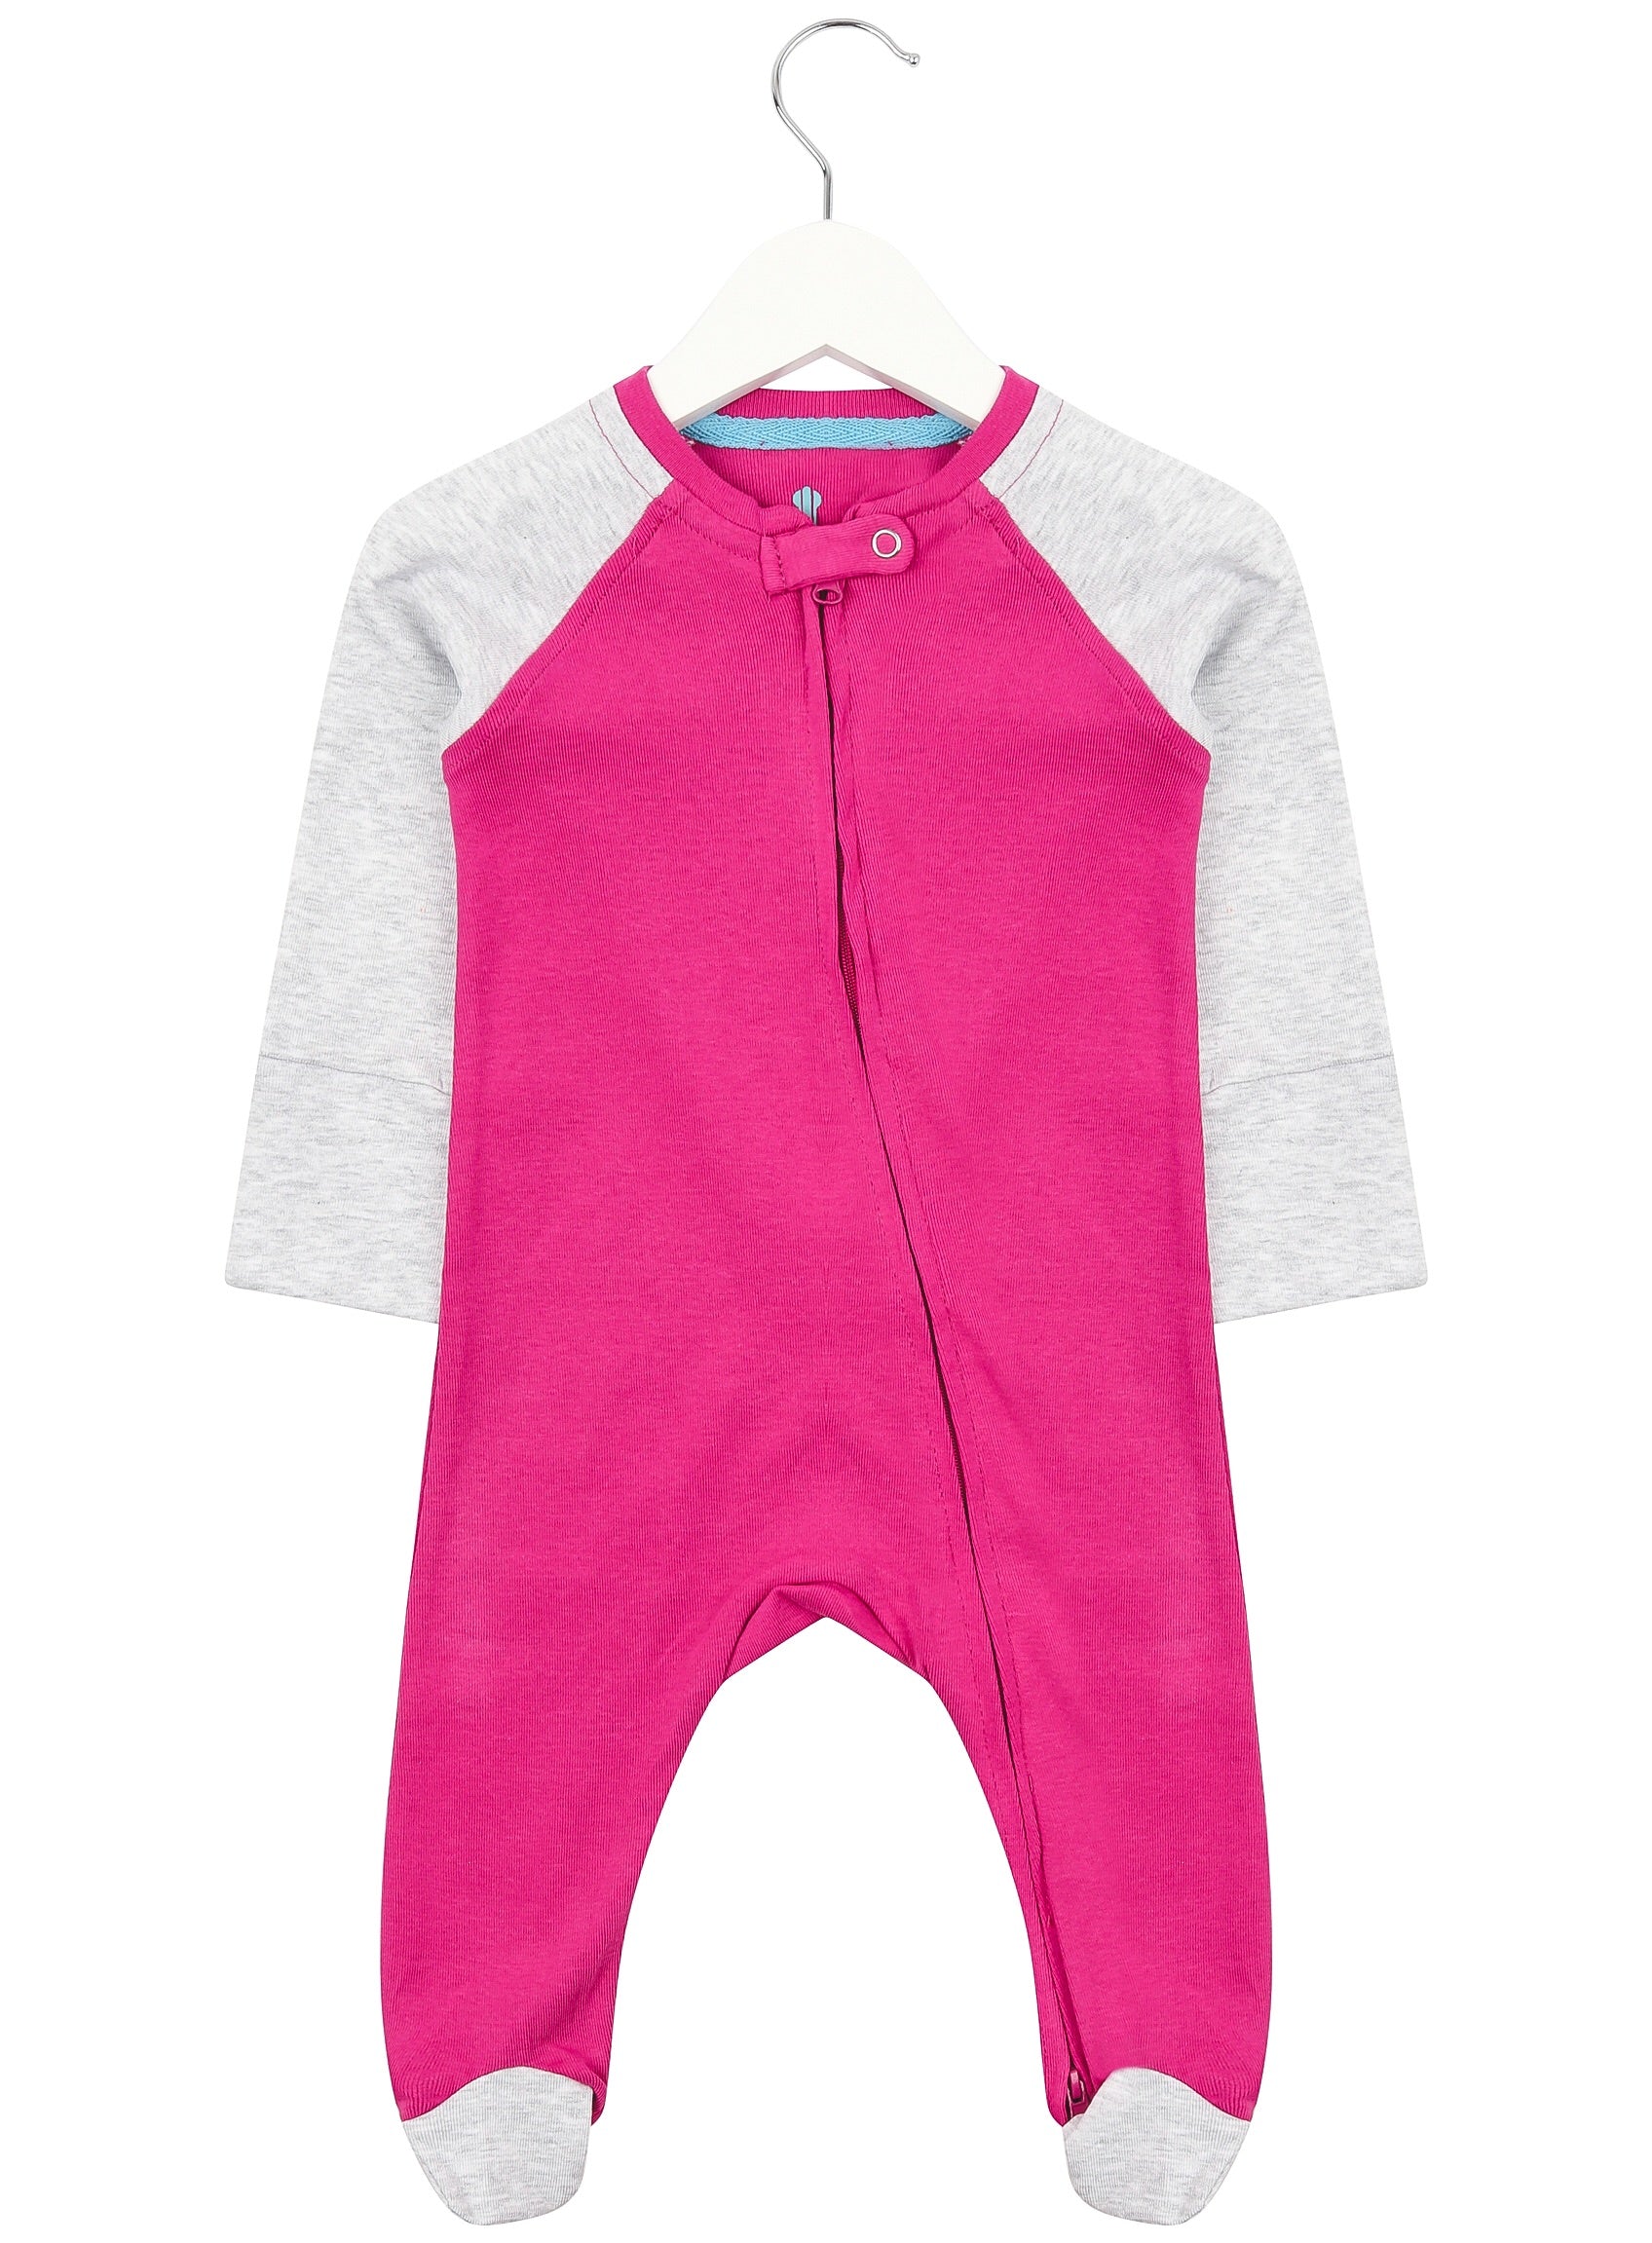 Pink and Grey Zipped Babygrow